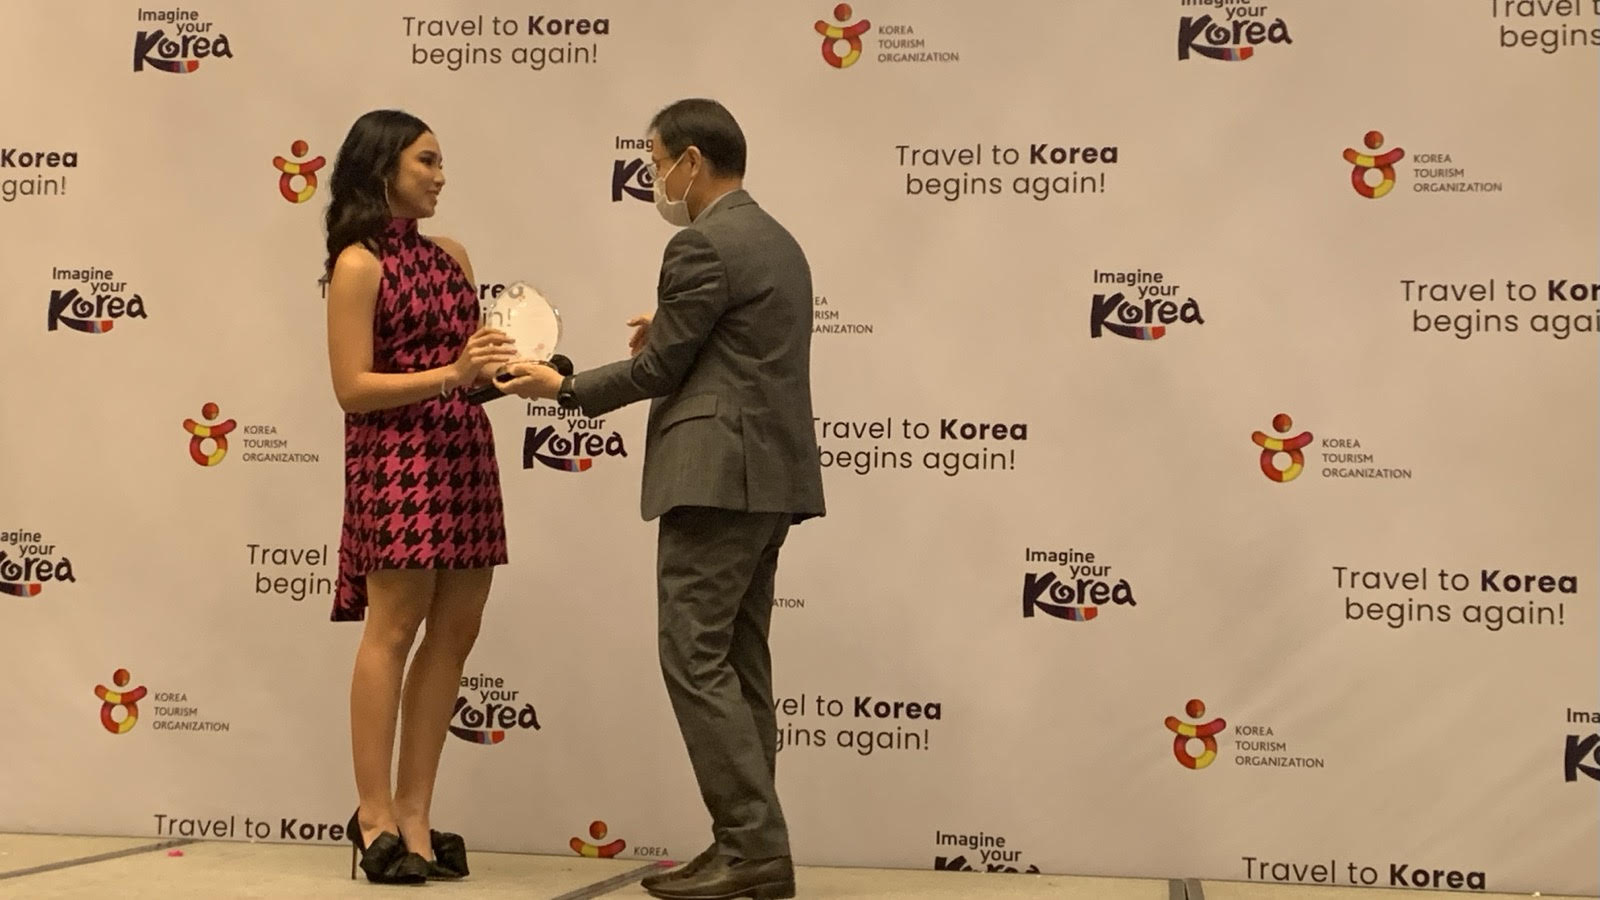 Kyline Alcantara is South Korea's new tourism envoy for PH